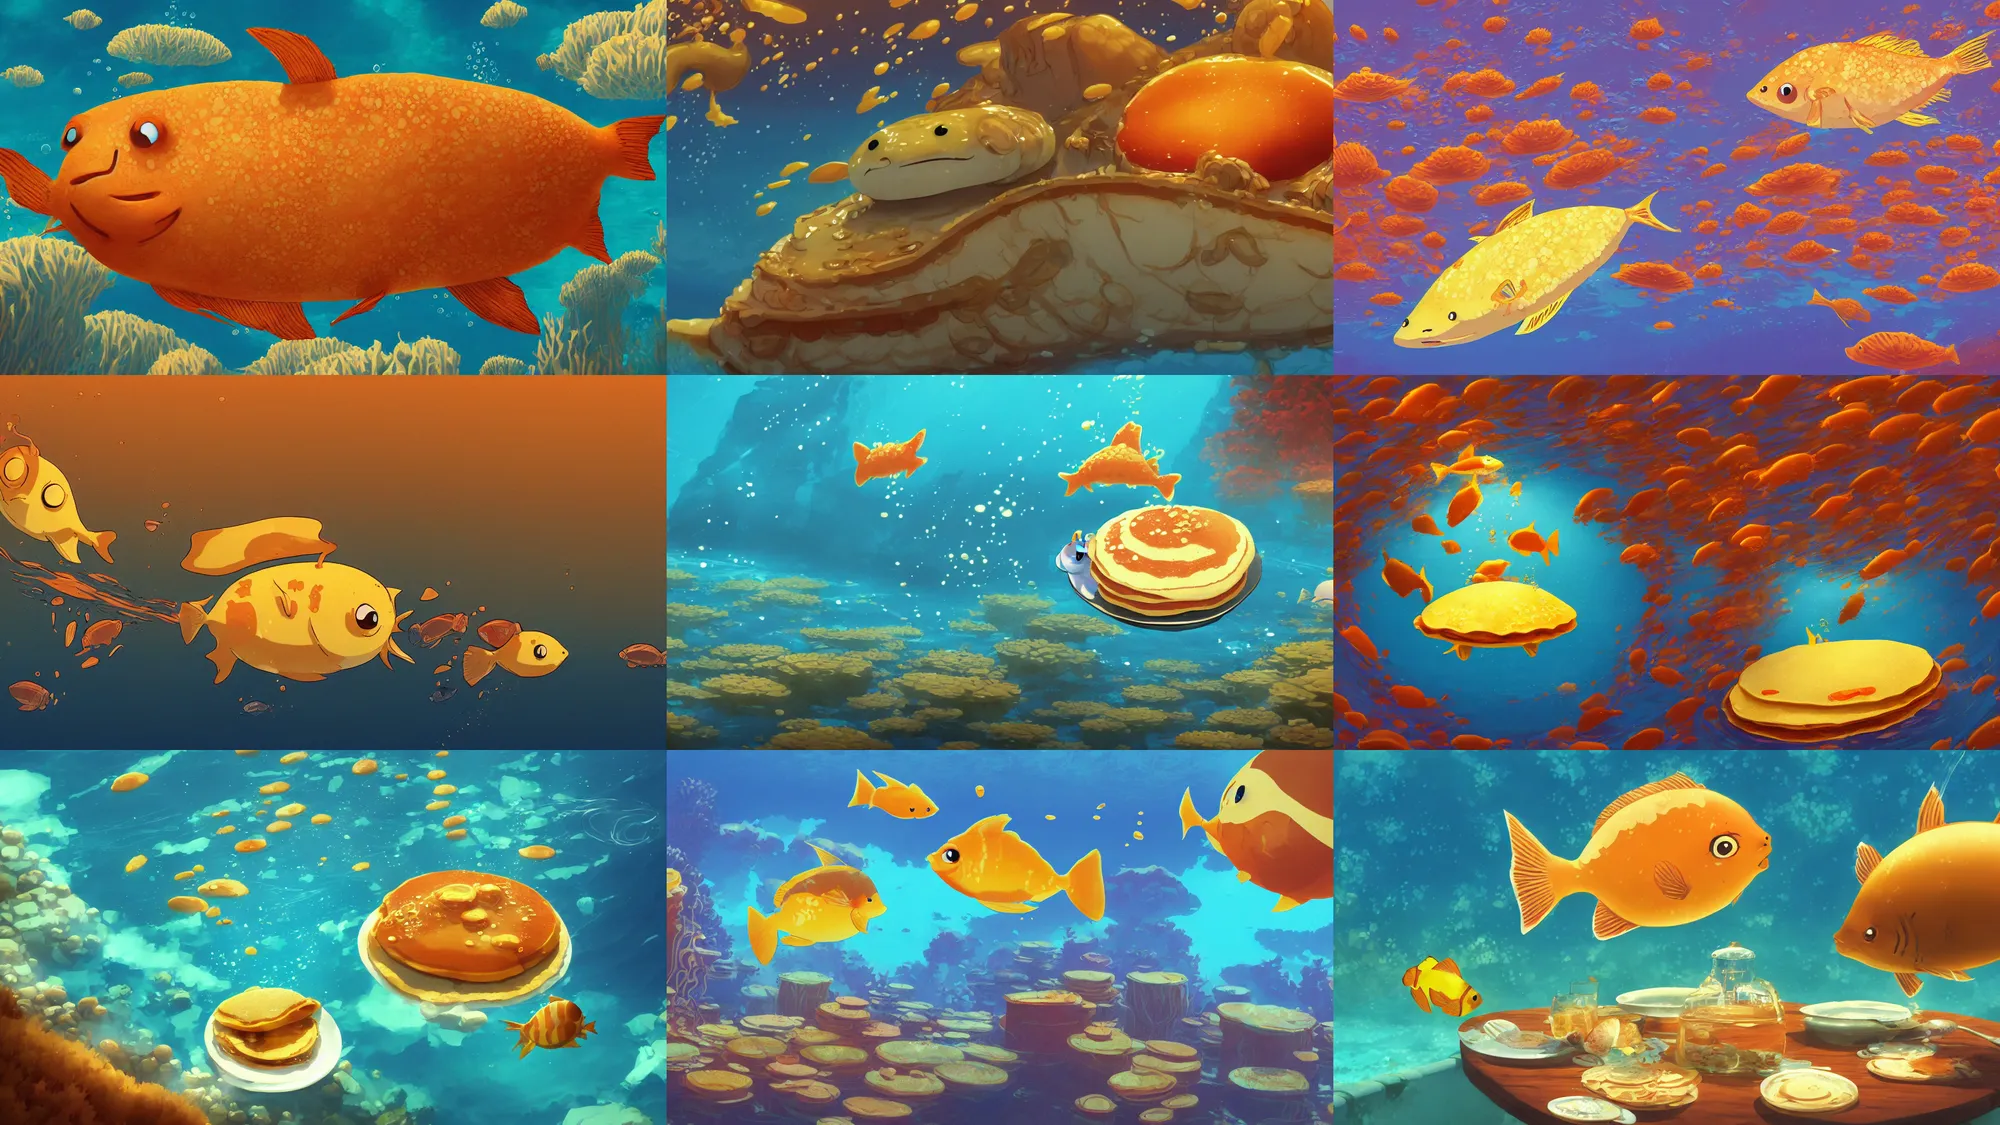 Prompt: digital underwater art of a happy flat pancake fish swimming in syrup, cute, 4 k, fish made of pancake, fantasy food world, living food adorable pancake, brown atmospheric lighting, by makoto shinkai, studio ghibli, chris moore